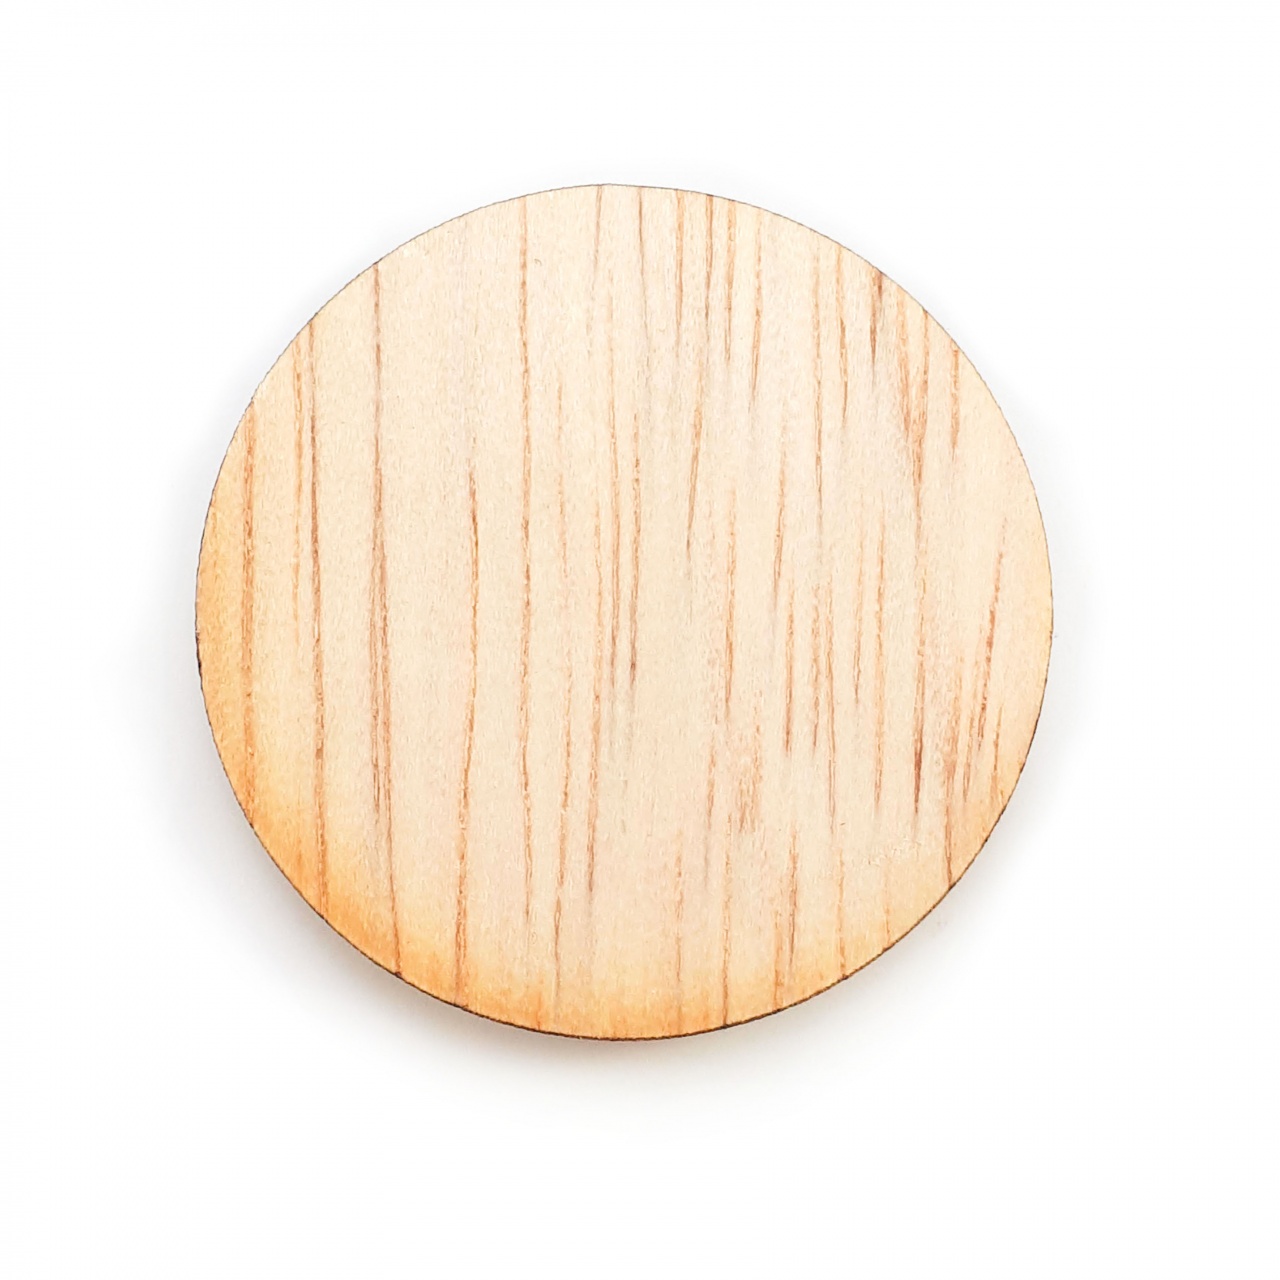 Bază rotundă 9 cm, placaj lemn :: Ø9 cm